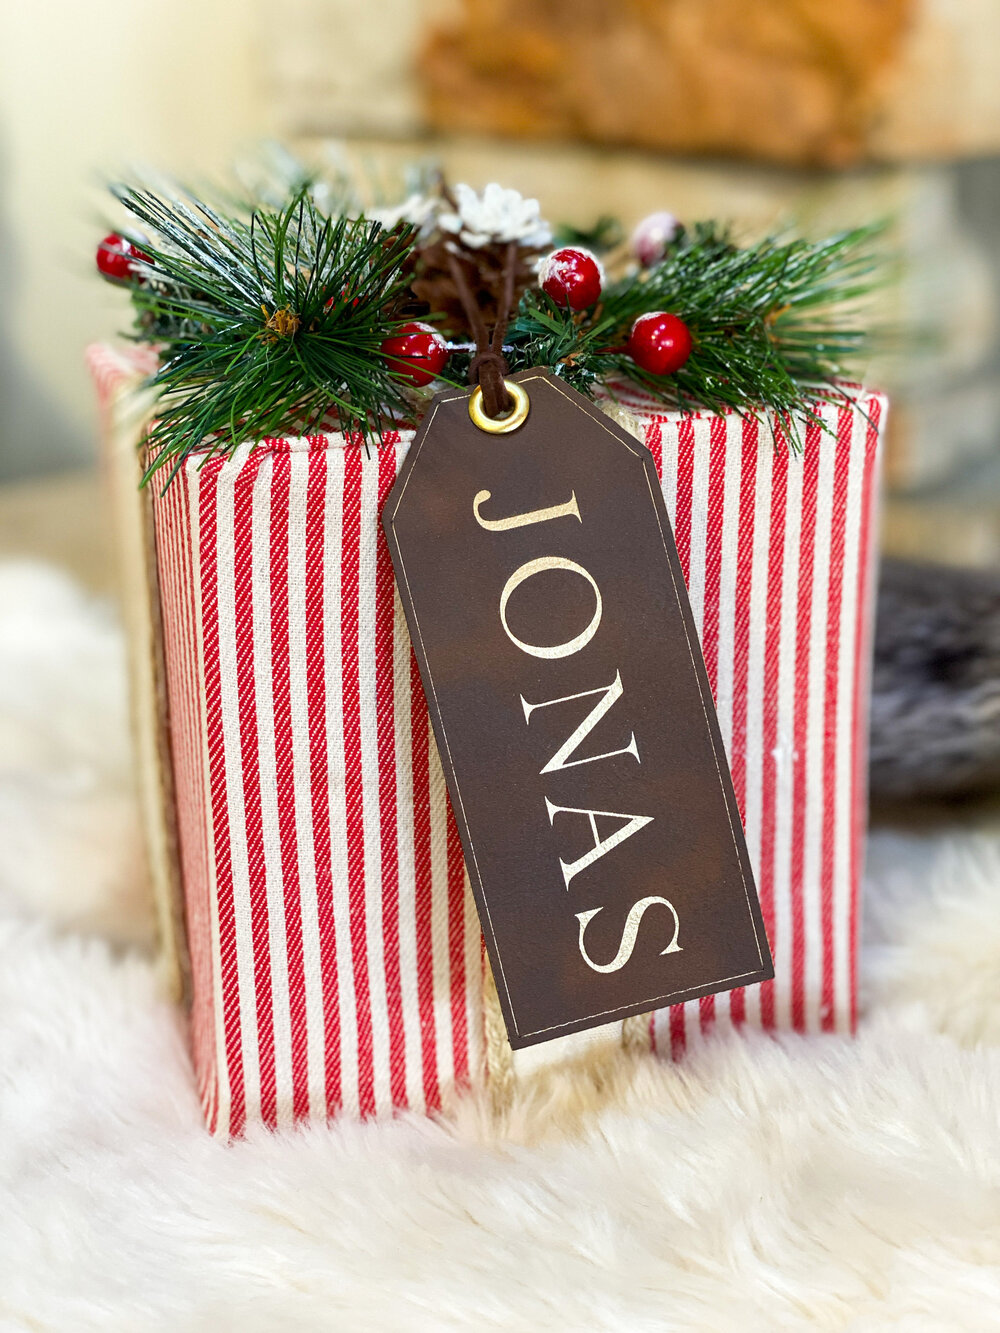 Christmas Stocking Tags, Stocking Name Tags, Leather Name Tags